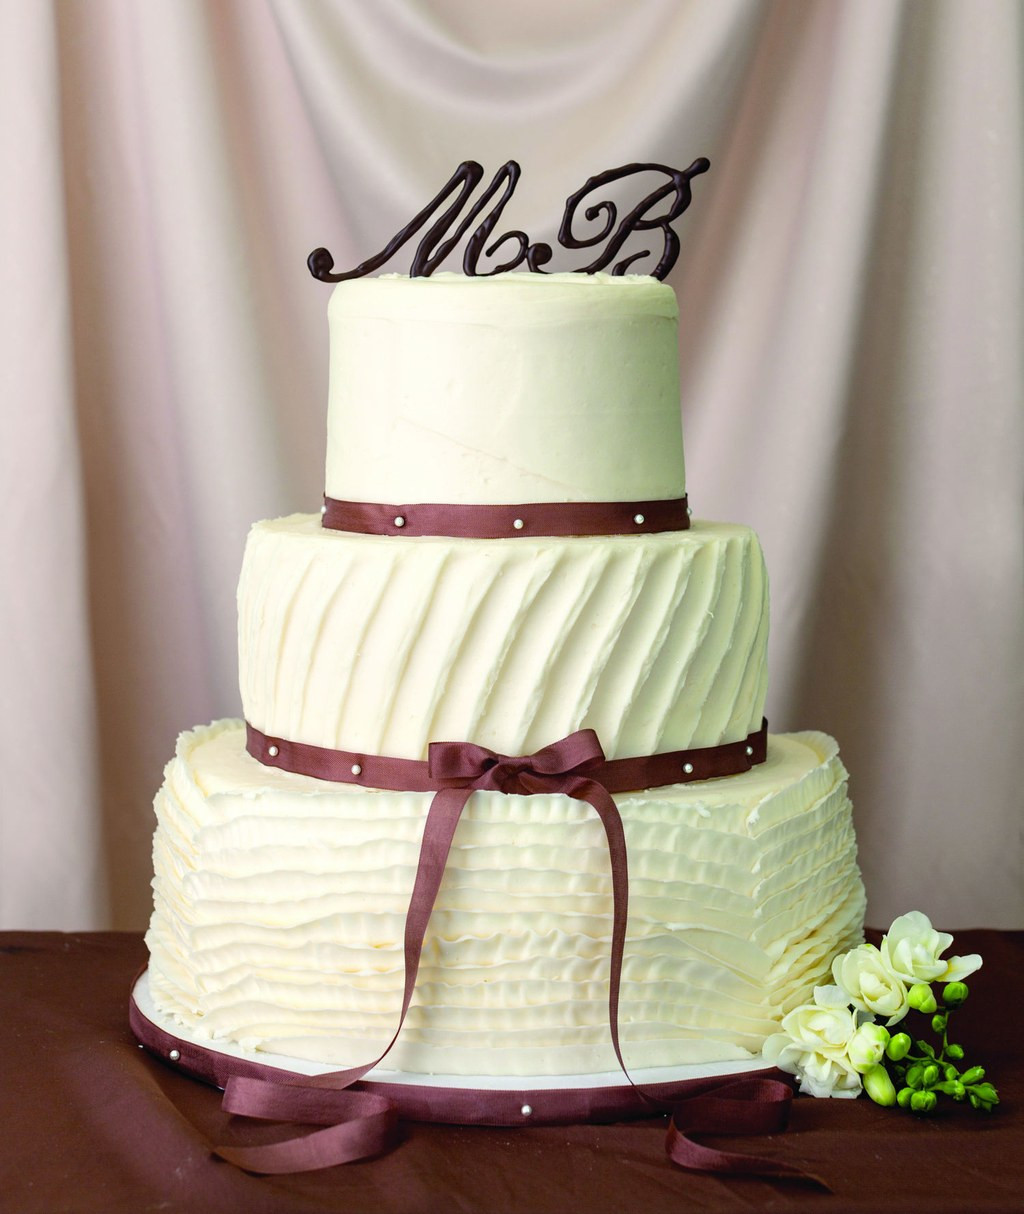 No Fondant Wedding Cakes
 21 Magnolia Bakery Wedding Cakes That Look So Delicious